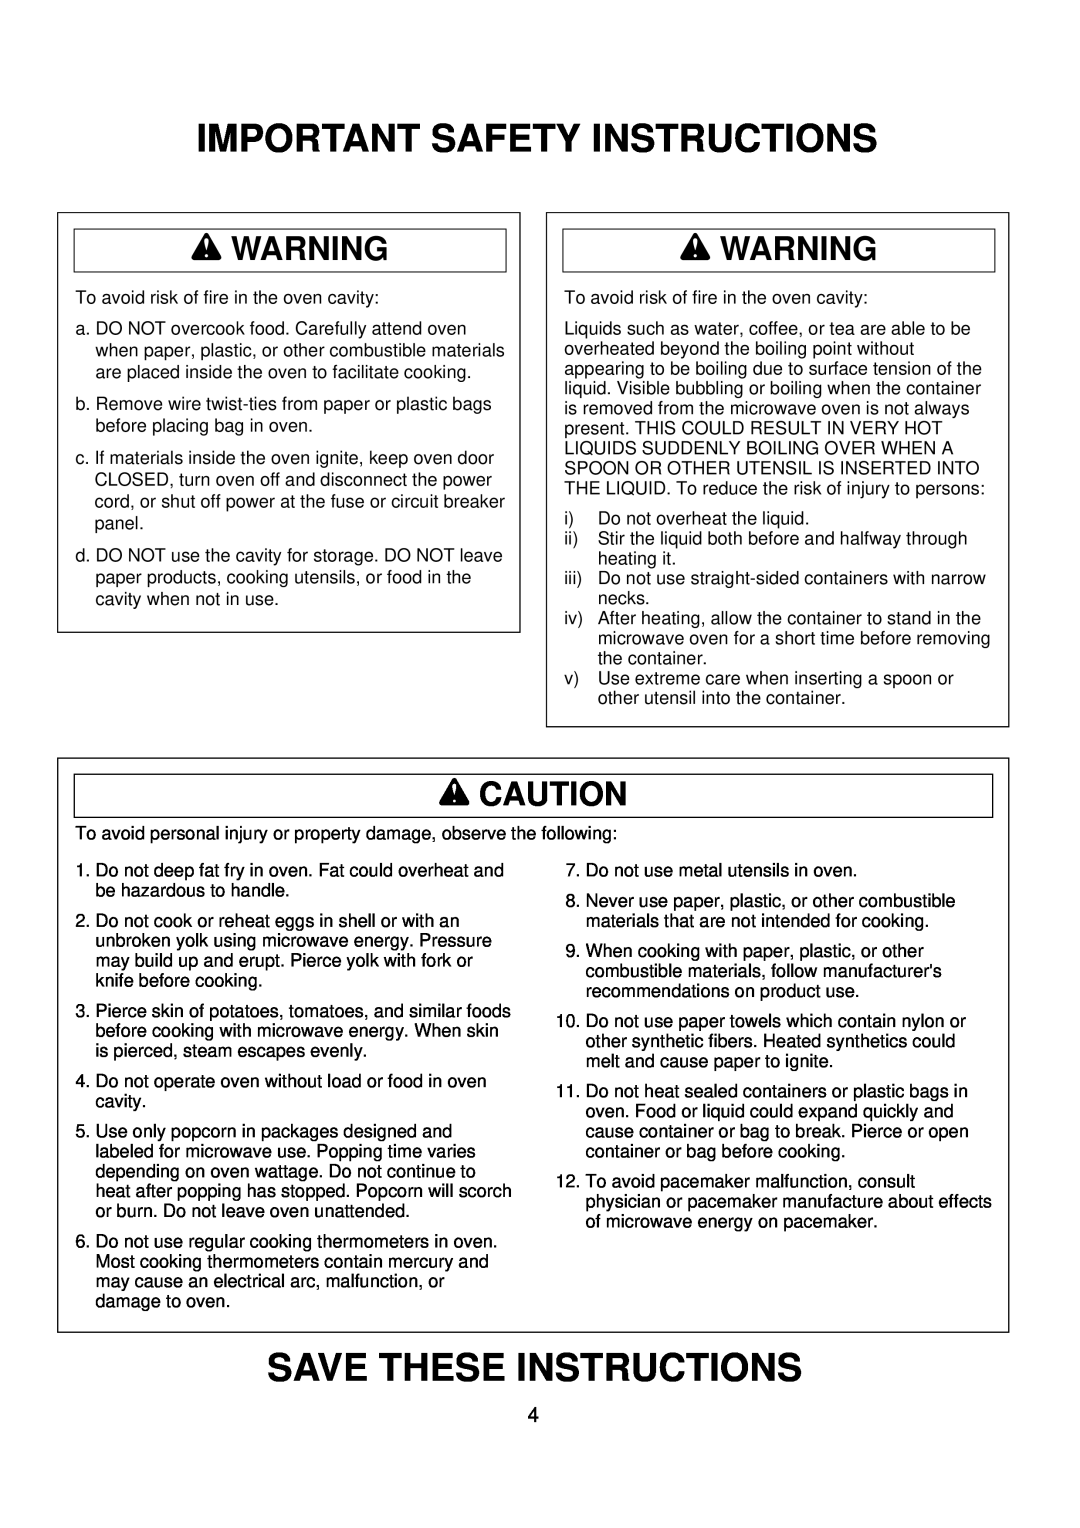 Amana ACO1520A important safety instructions w CAUTION, Important Safety Instructions, Save These Instructions, wWARNING 